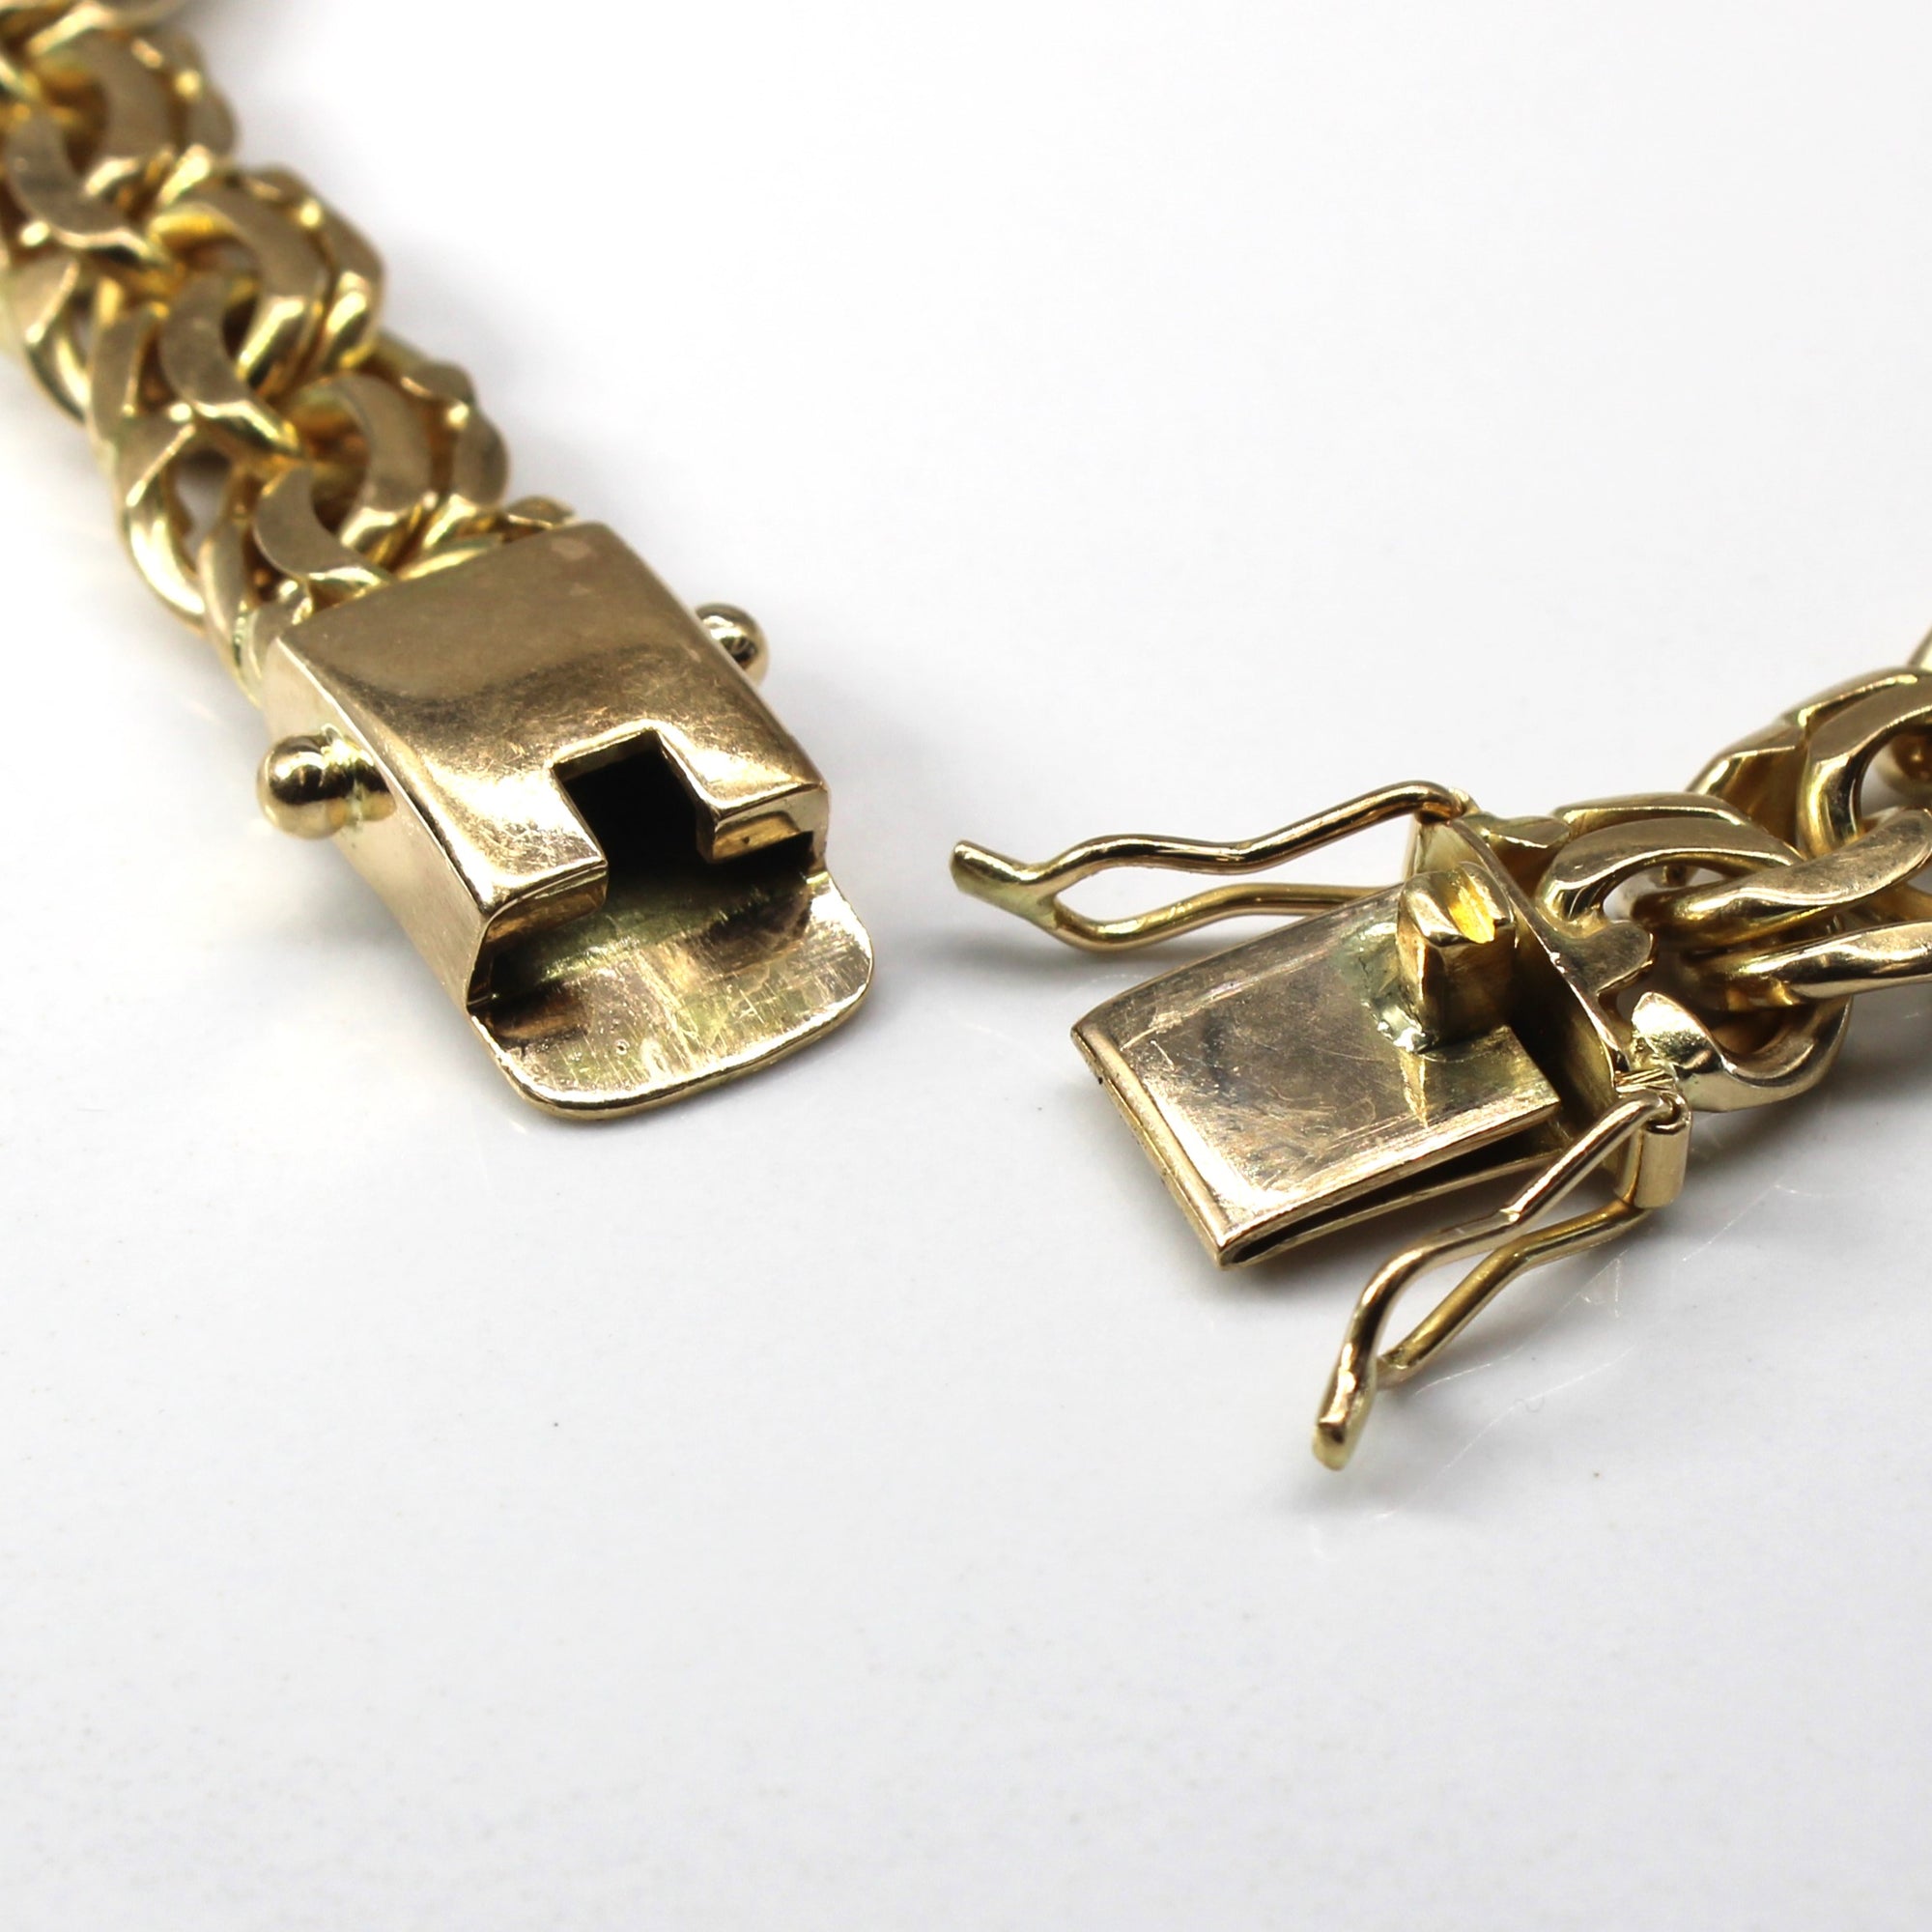 Curb Link Chain Bracelet | 9